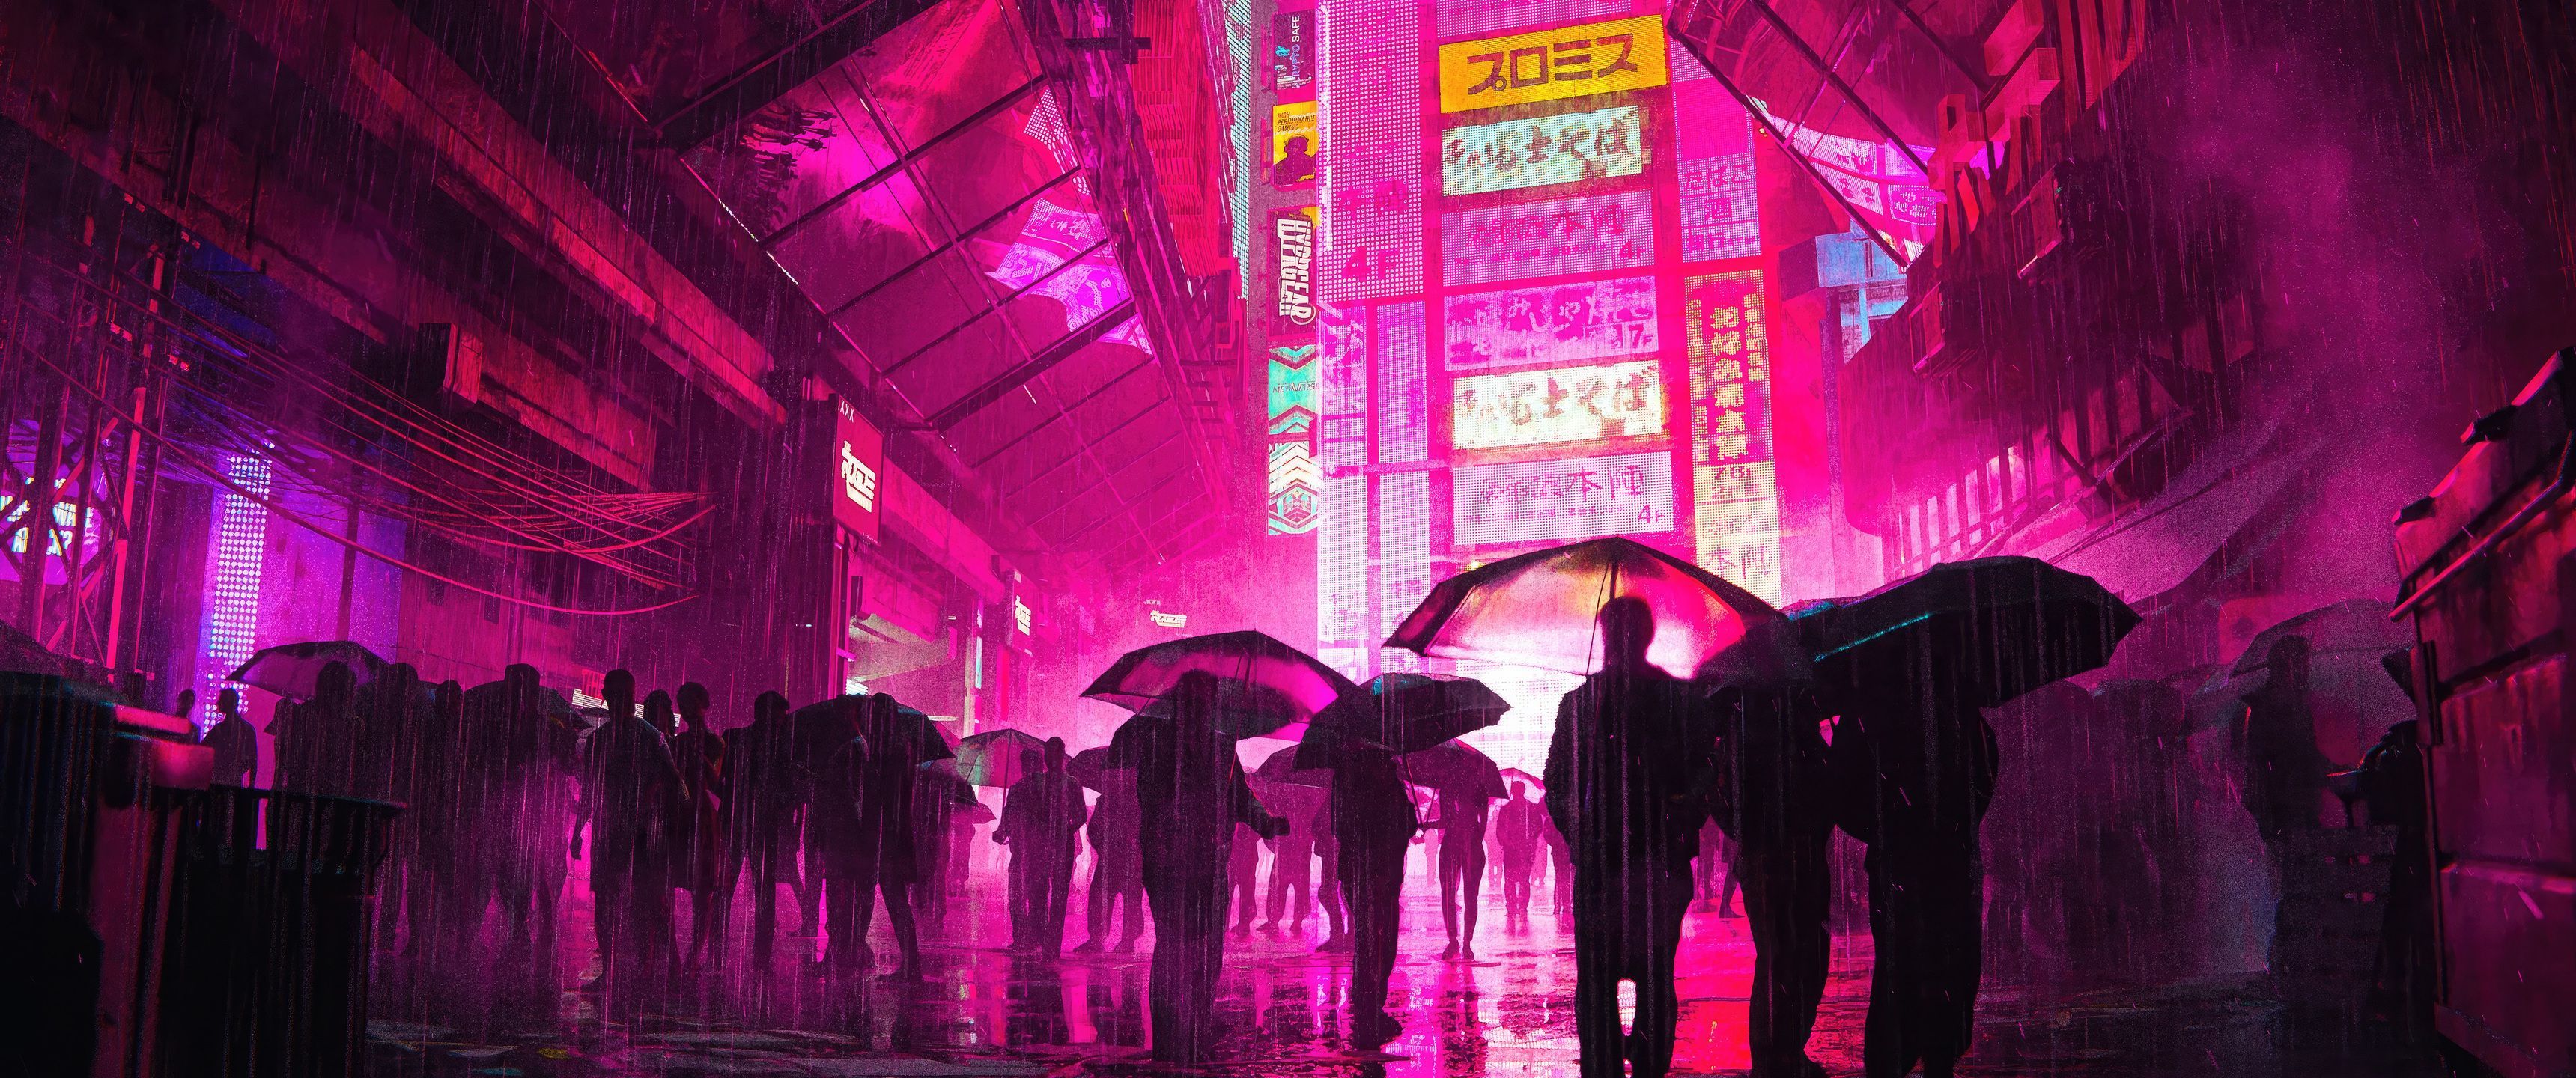 People walking under umbrellas in a neon lit street - 3440x1440, neon pink